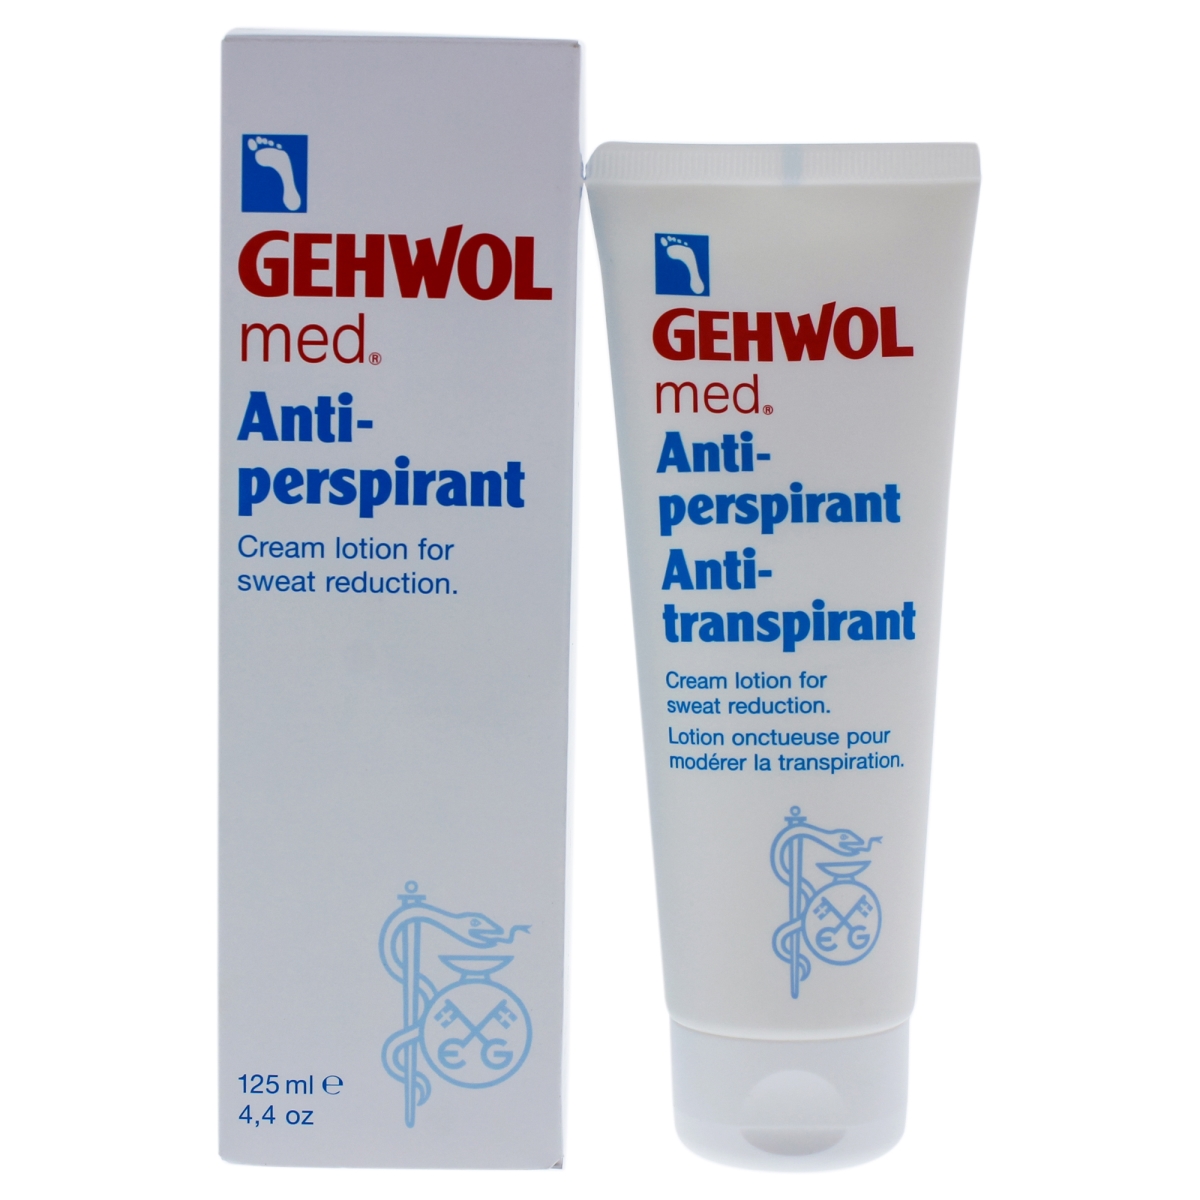 I0091918 Med Anti-perspirant Foot Cream Lotion For Unisex - 4.4 Oz